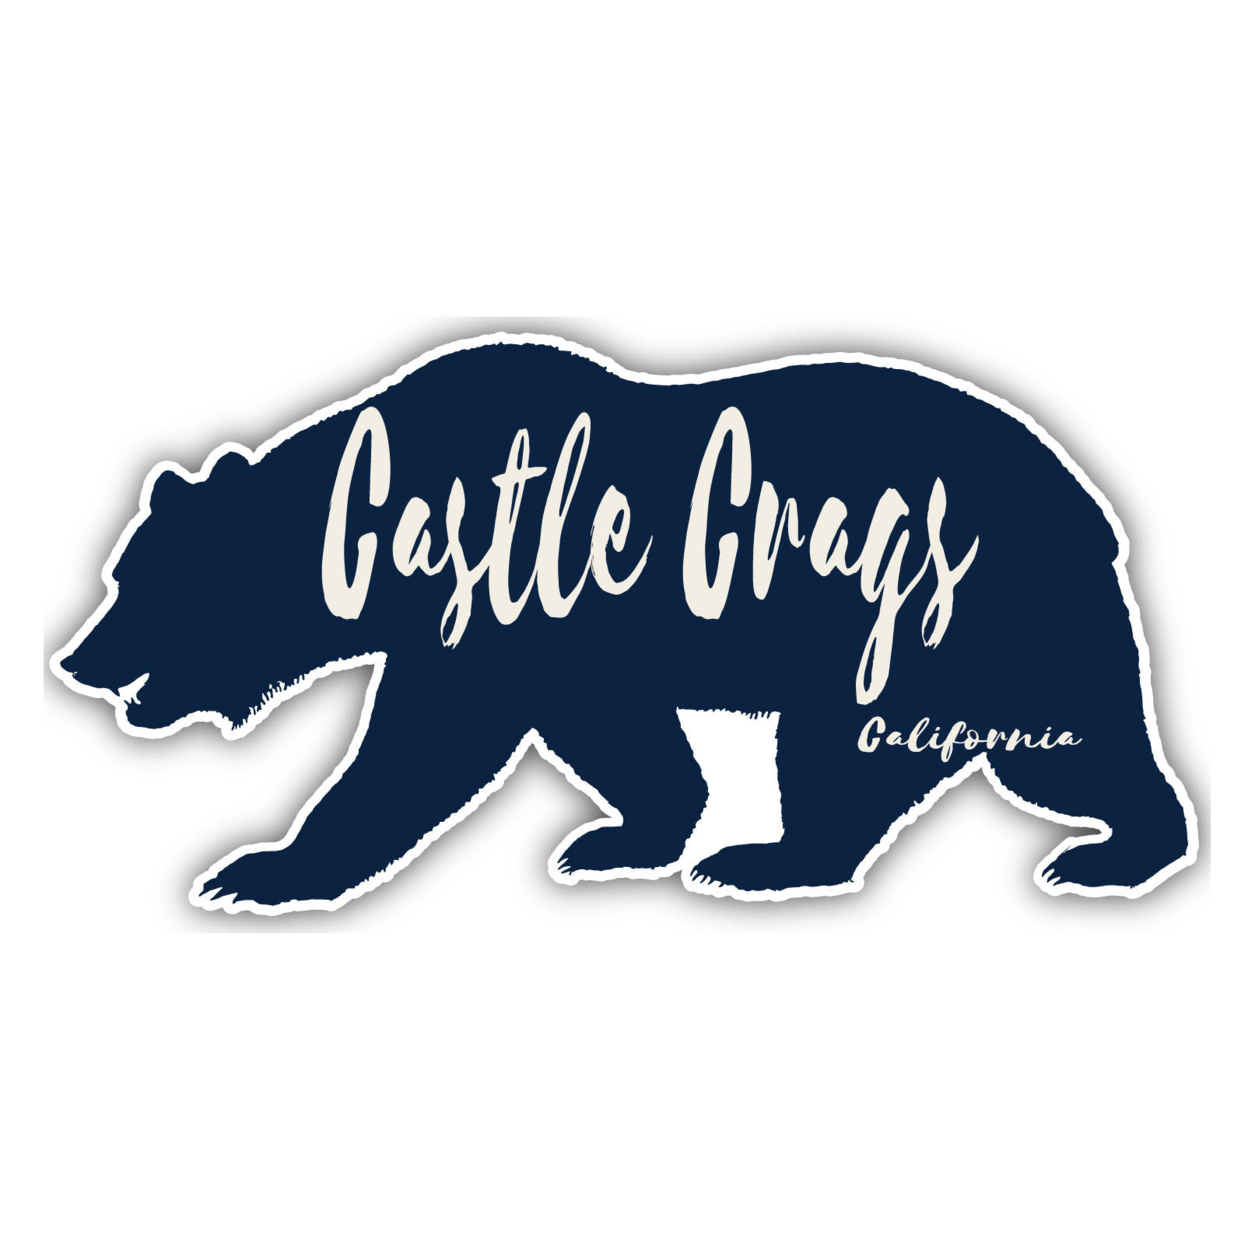 Castle Crags California Souvenir Decorative Stickers (Choose Theme And Size) - Single Unit, 4-Inch, Bear